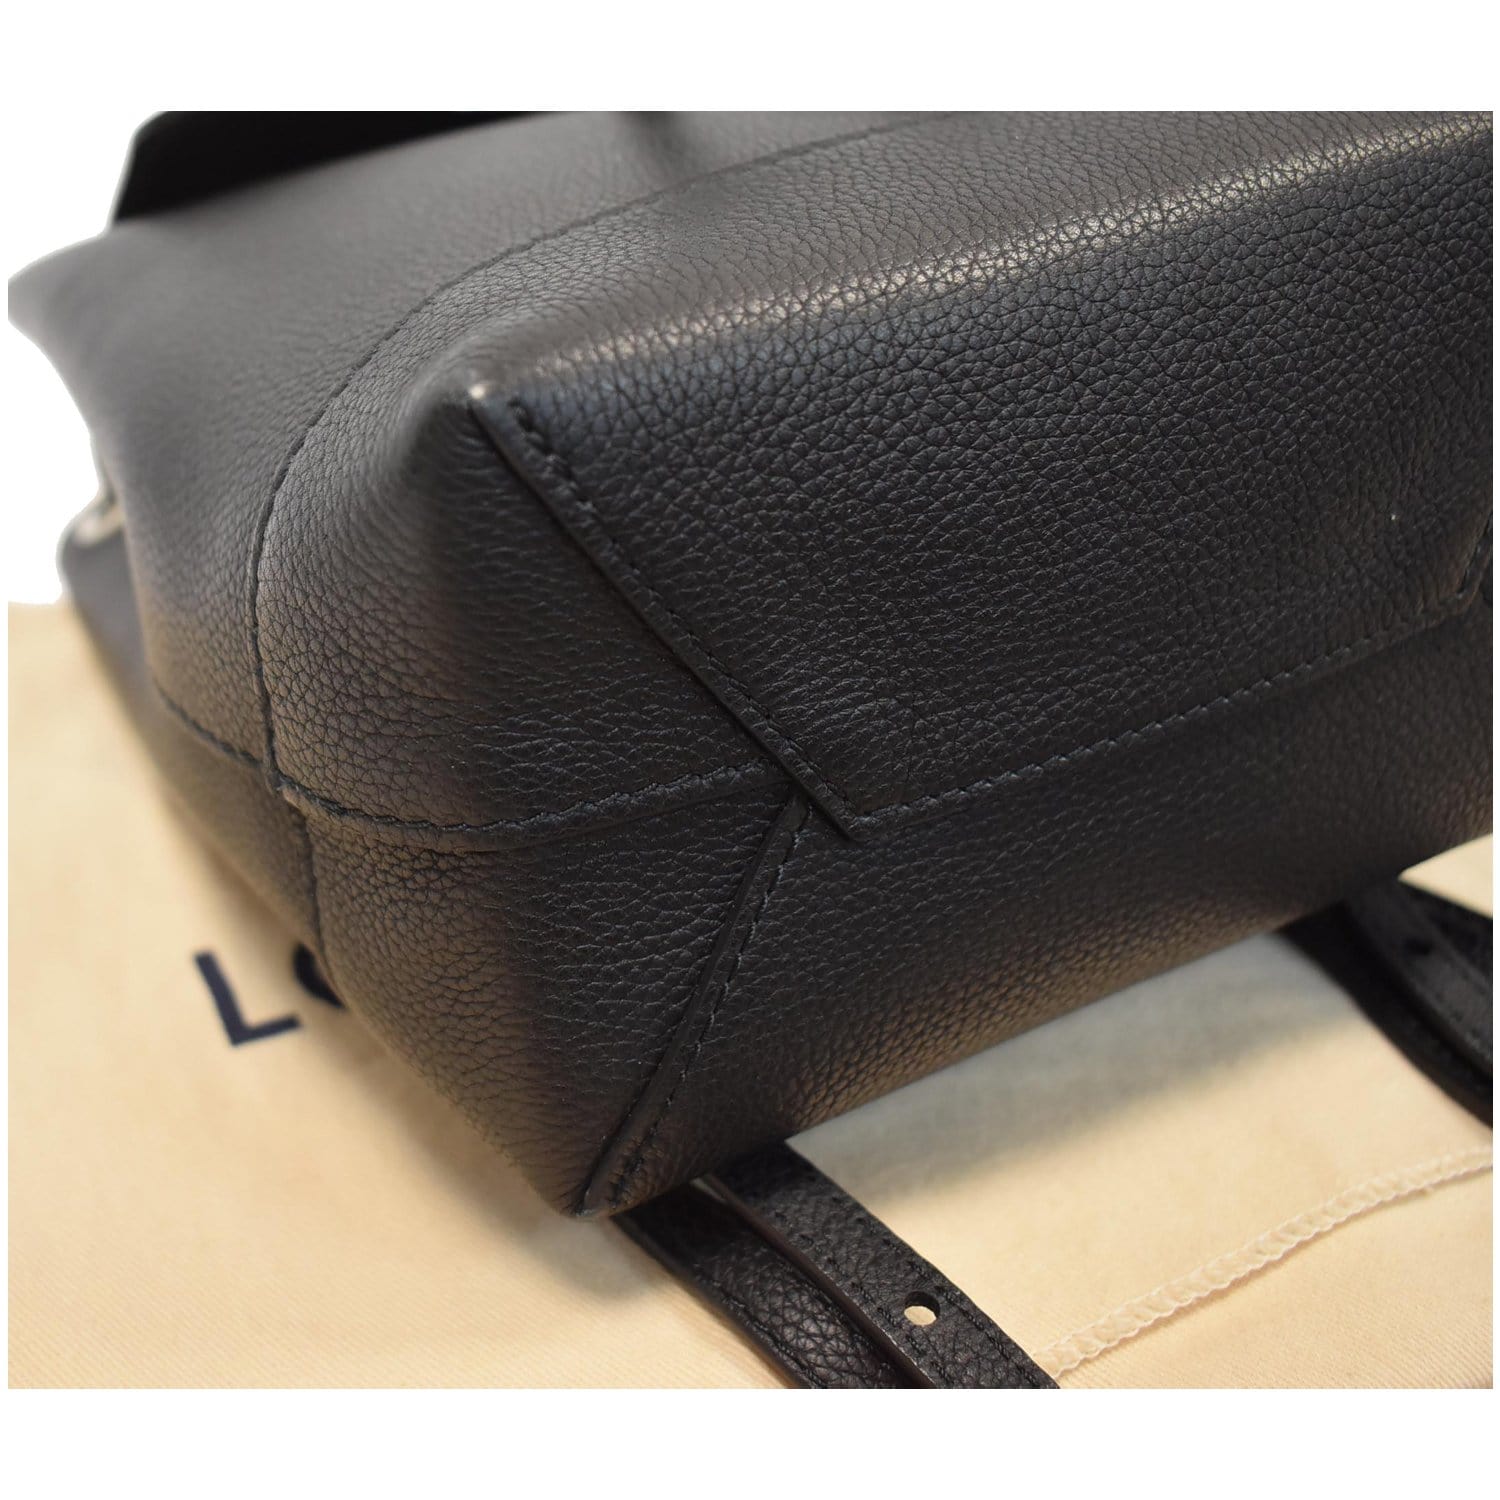 LOUIS VUITTON LockMe Mini Calfskin Leather Backpack Bag